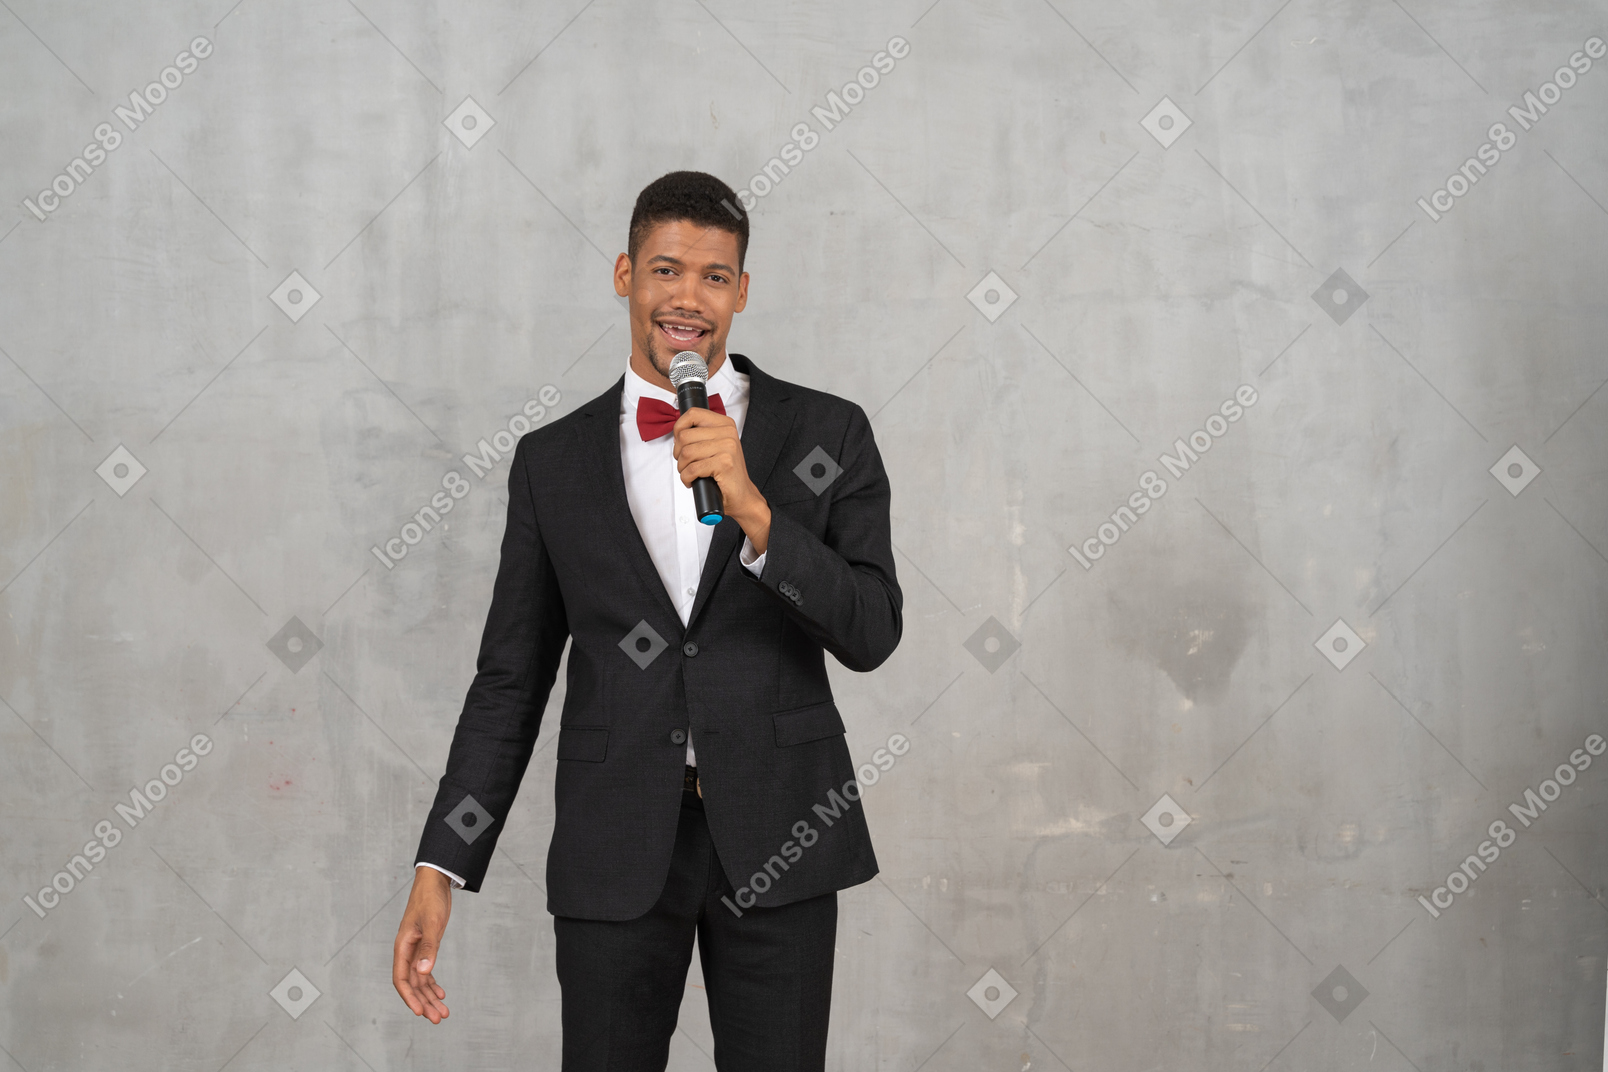 Mann im schwarzen anzug singt ins mikrofon